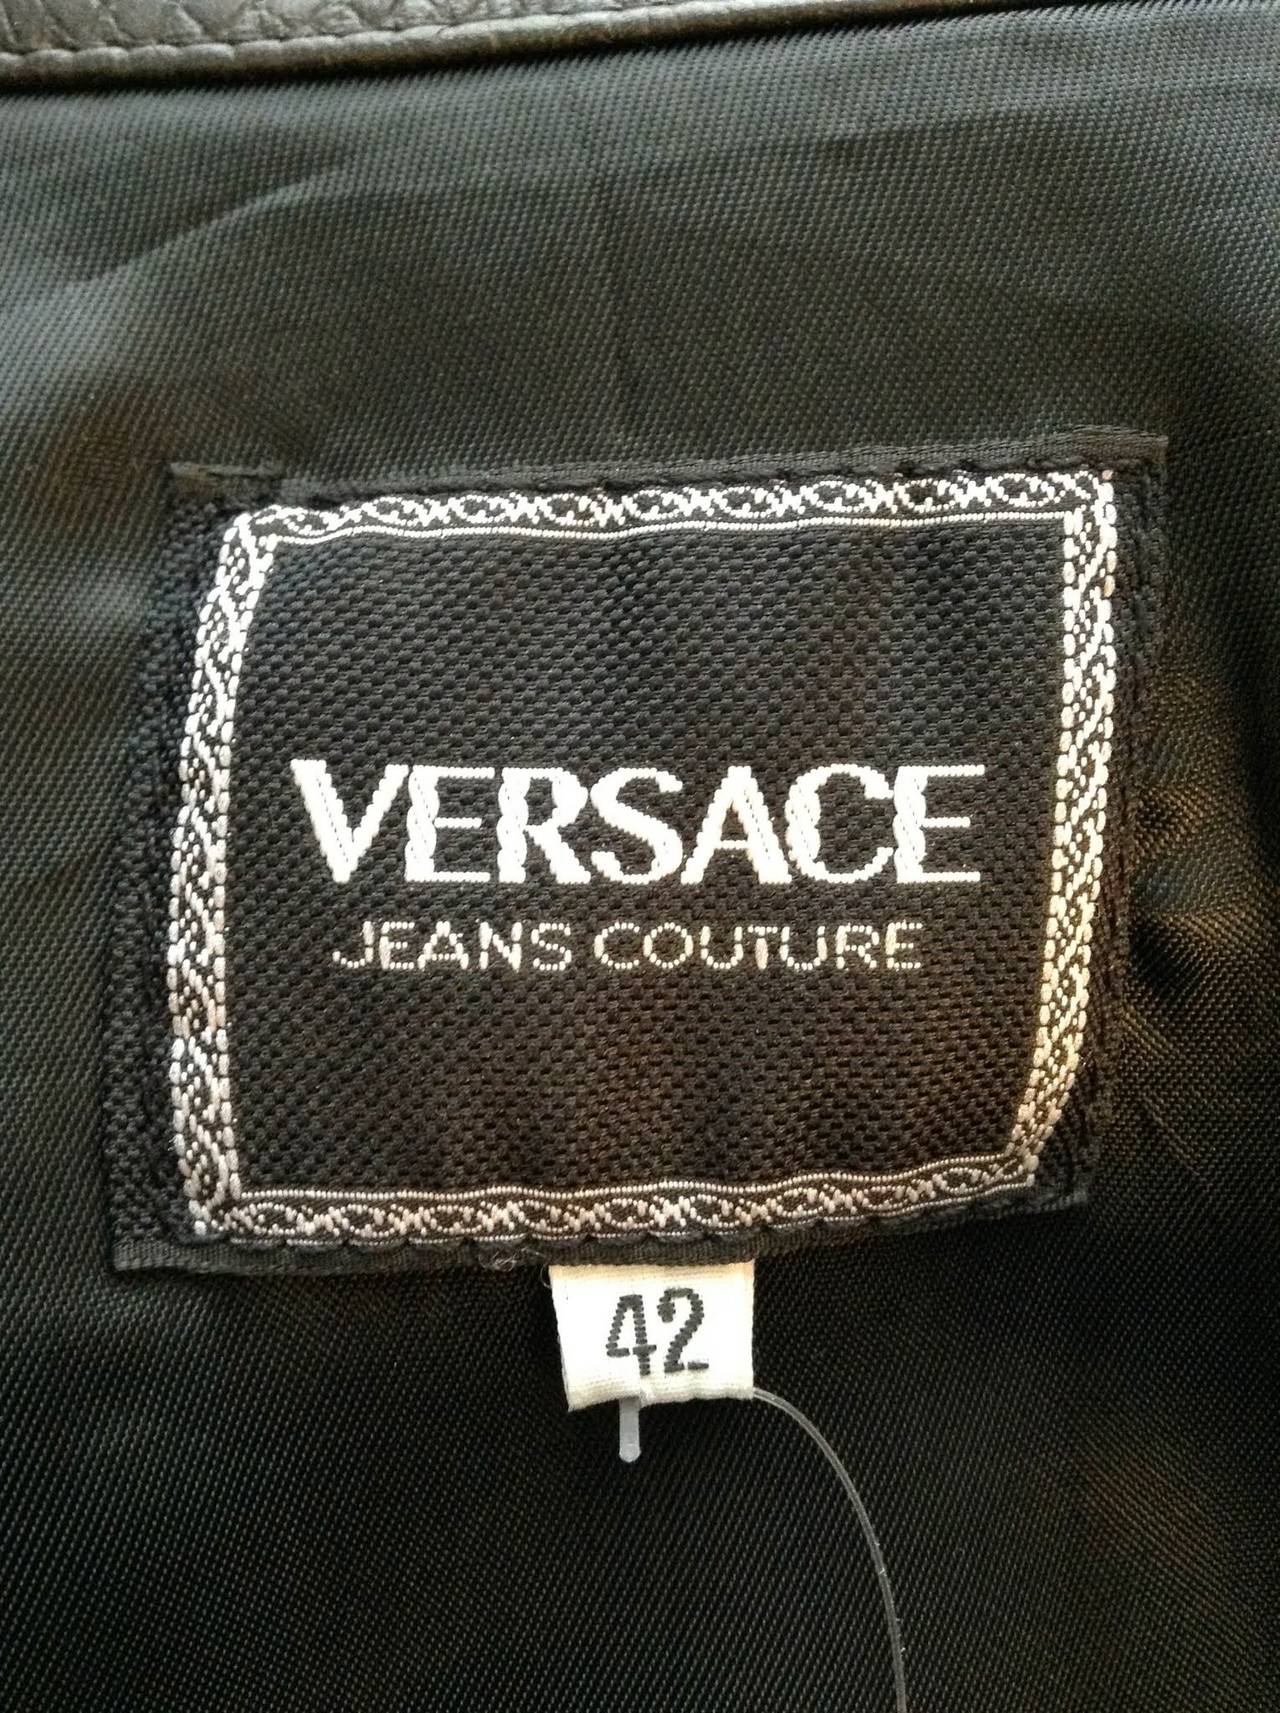 Versace Jeans Couture Unworn Vintage Cropped Leather Jacket Sz 42/6 4